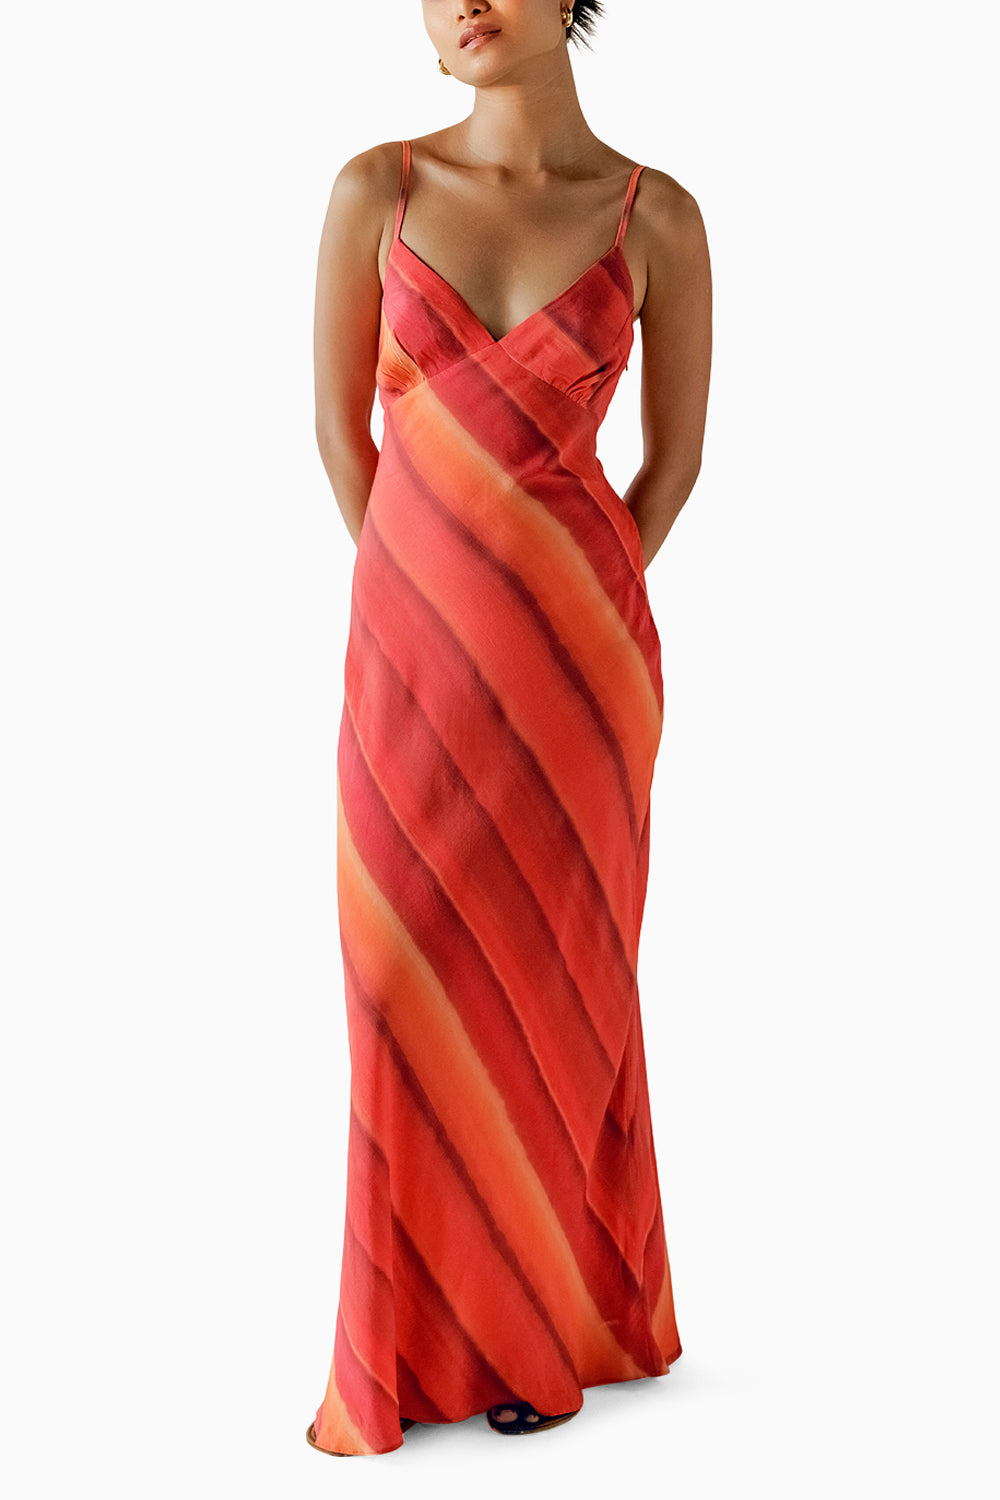 Celia Dress - Ember Stripes